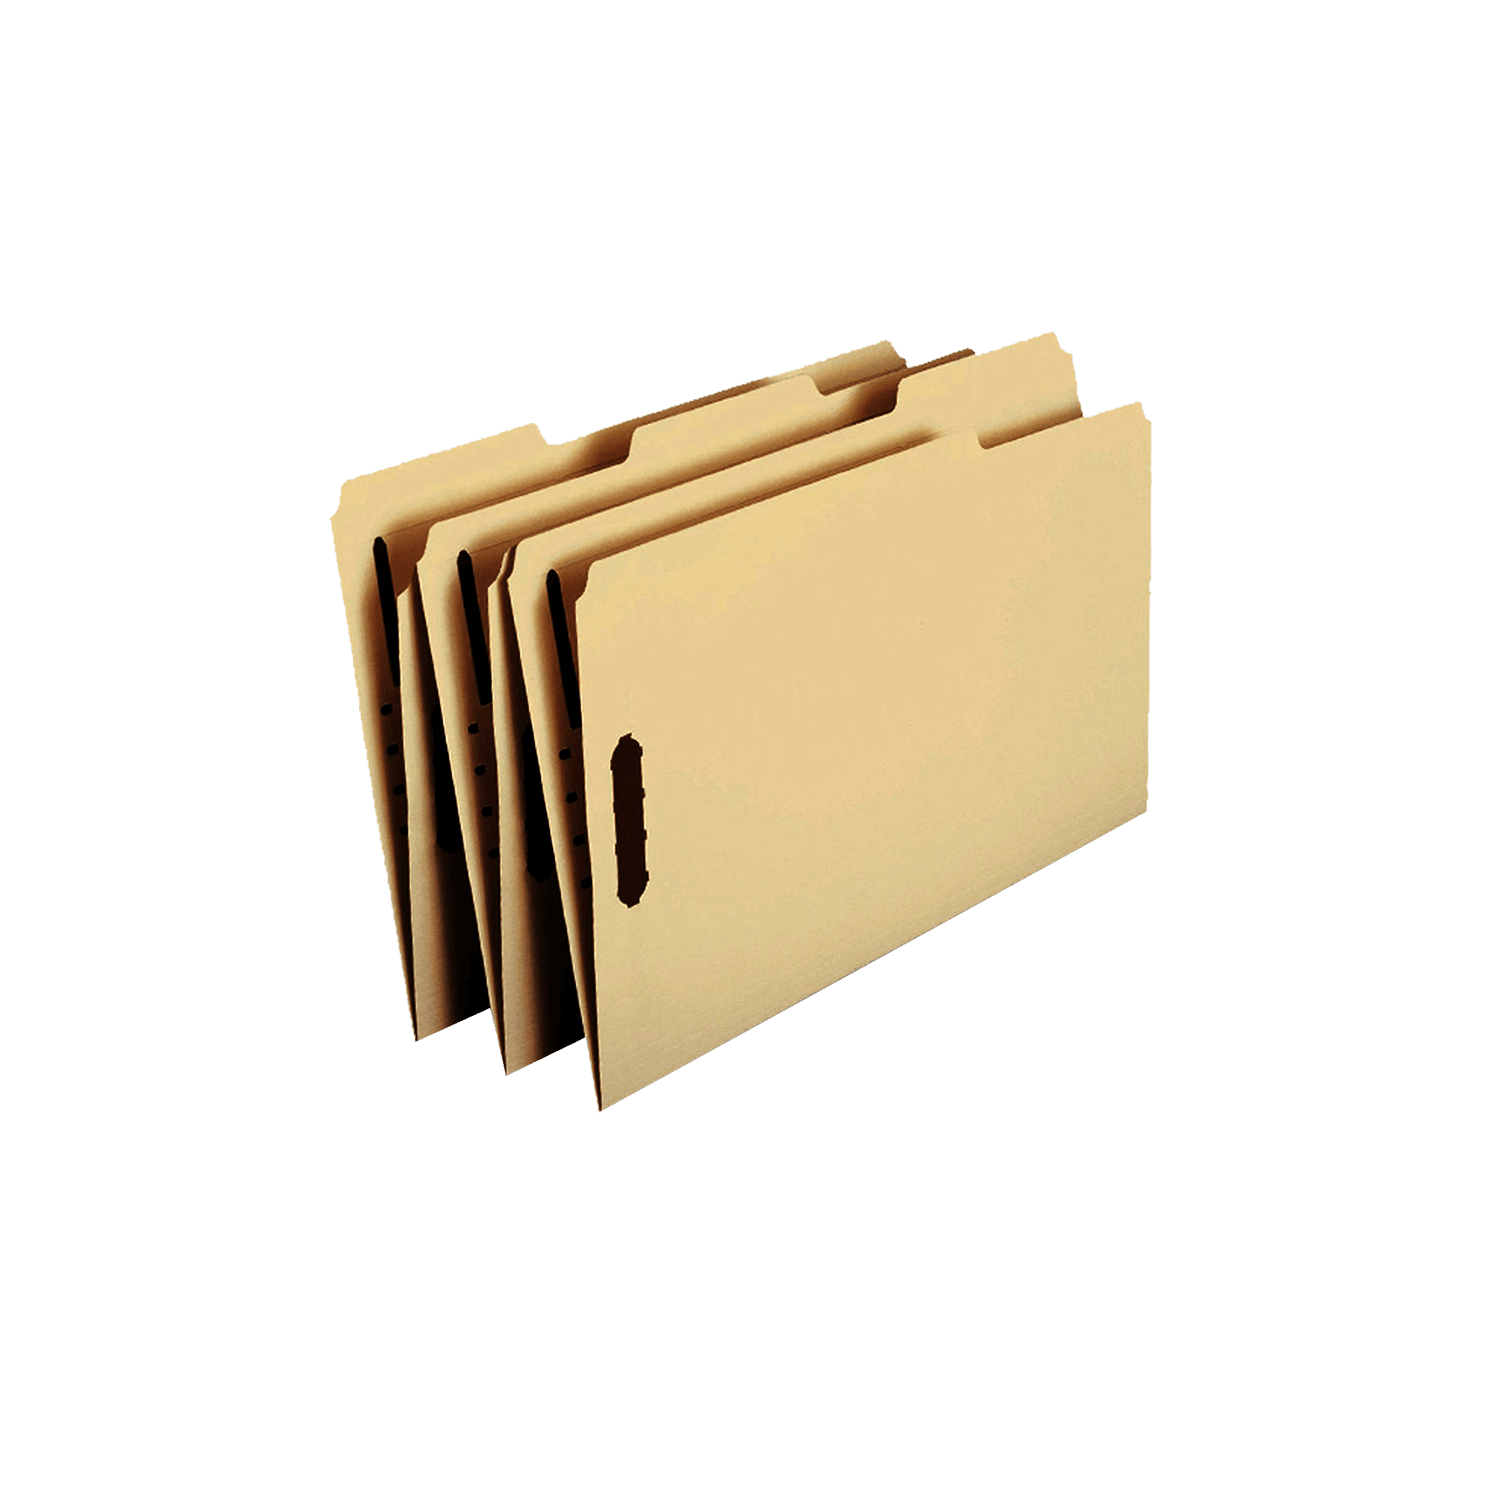 Document Folders